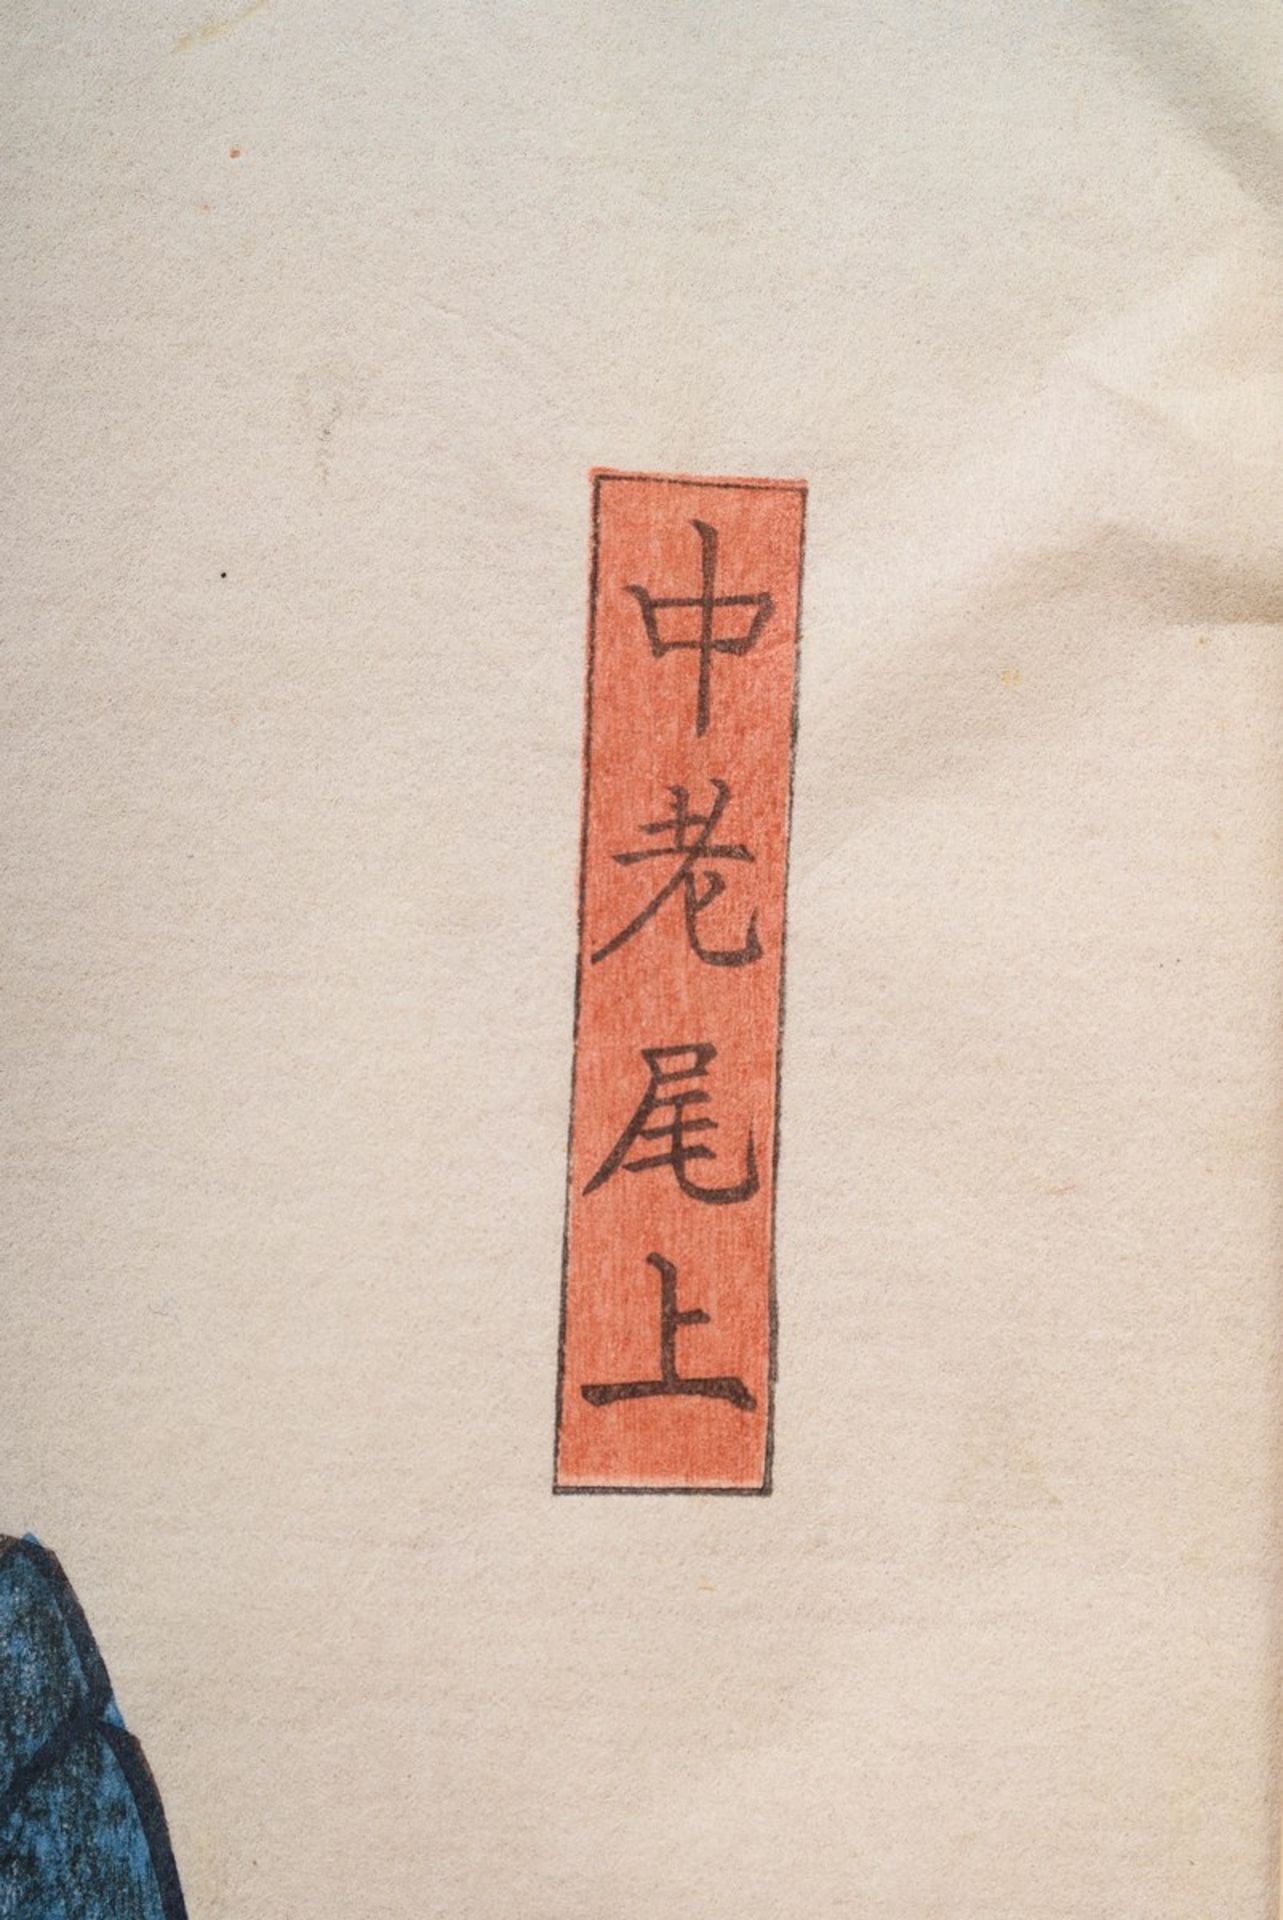 Utagawa Toyokuni (1769-1825) "Zwei Damen" Farbholzschnitt, 36x25cm, Ränder defekt - Image 7 of 7